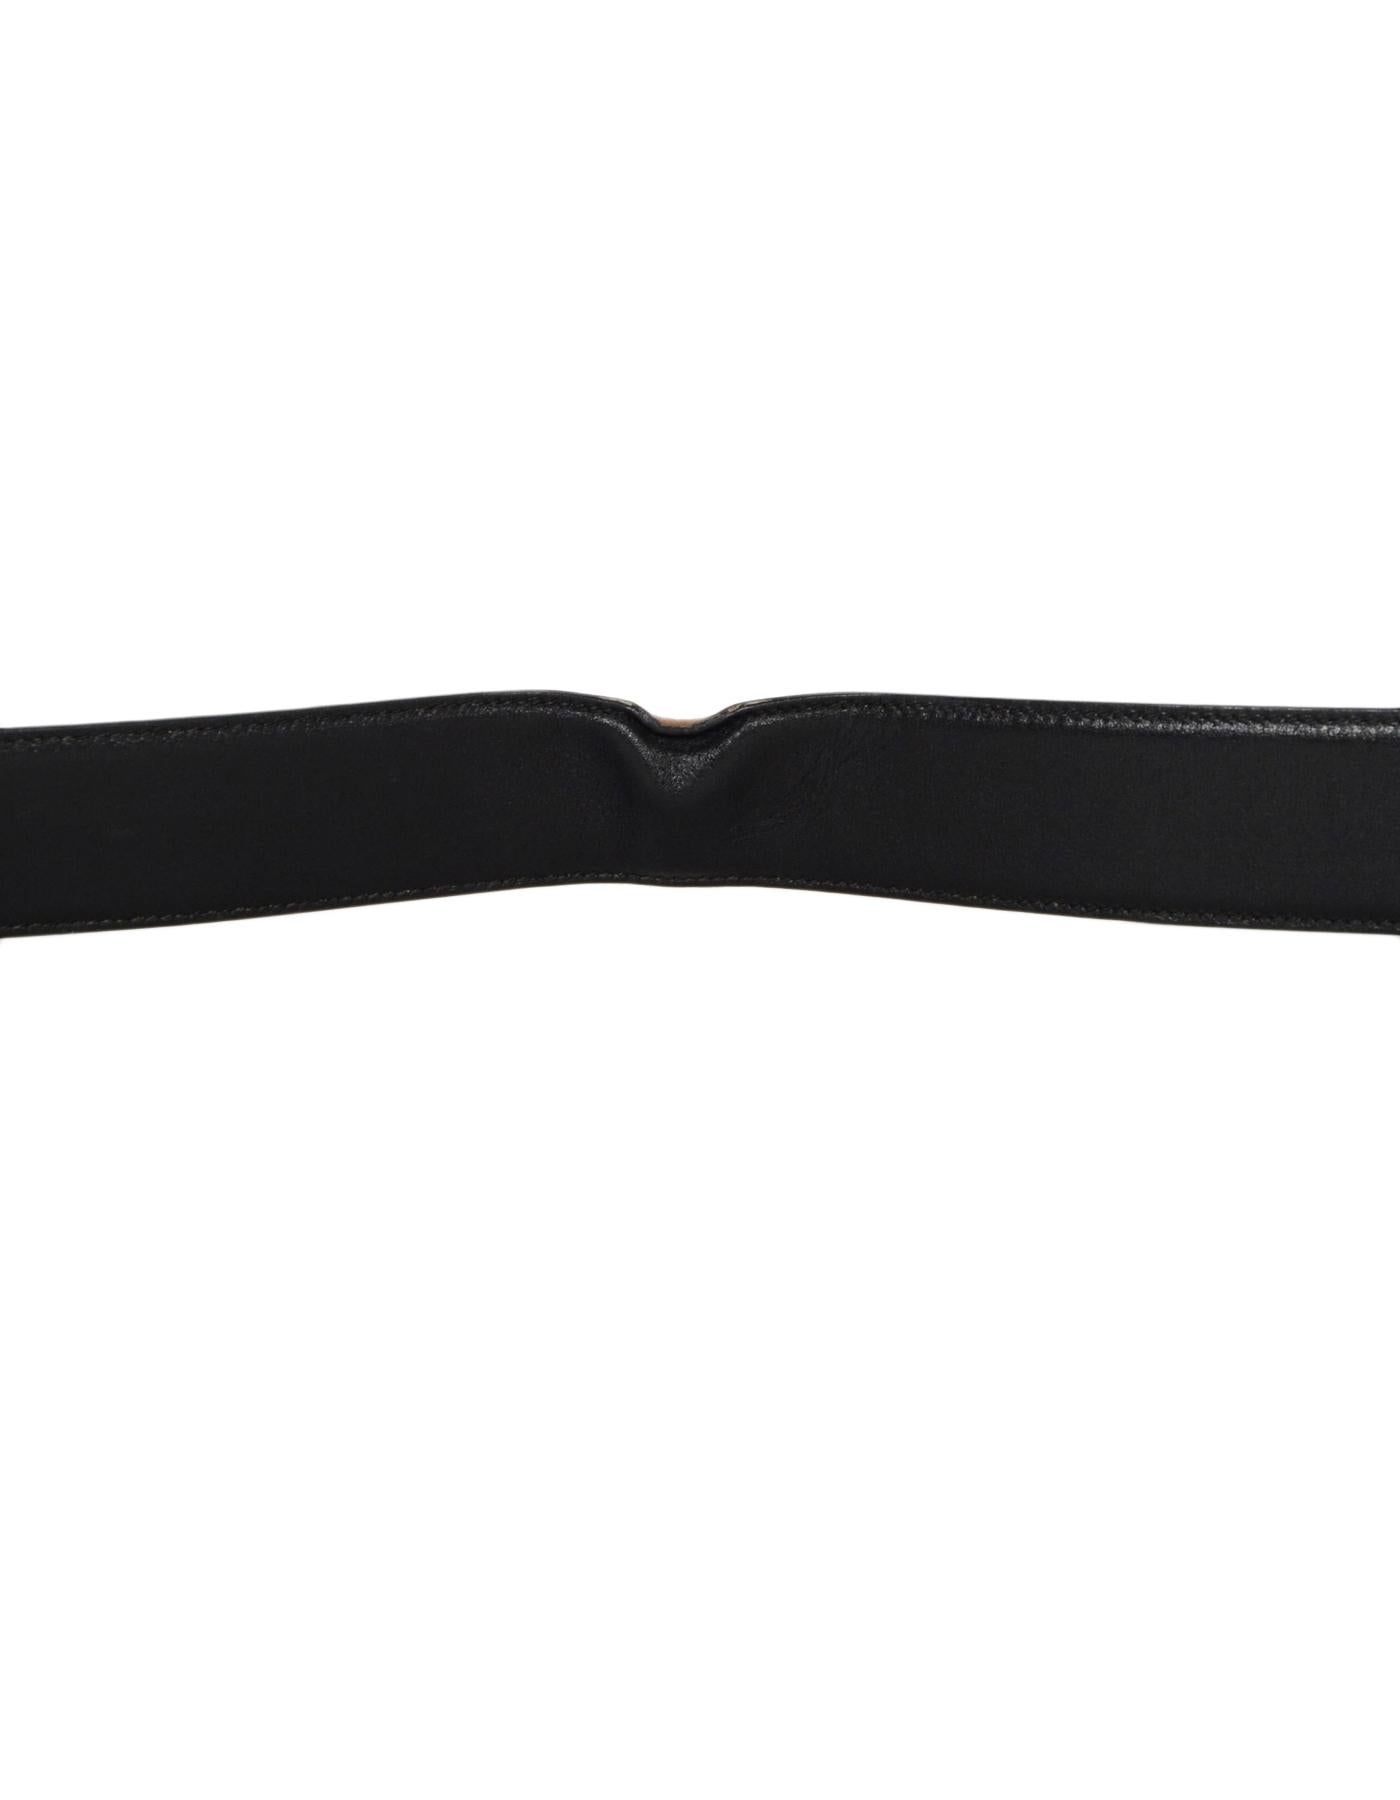 Gucci Black/Tan Reversible Leather Belt W/ G Buckle Sz 65/26 7